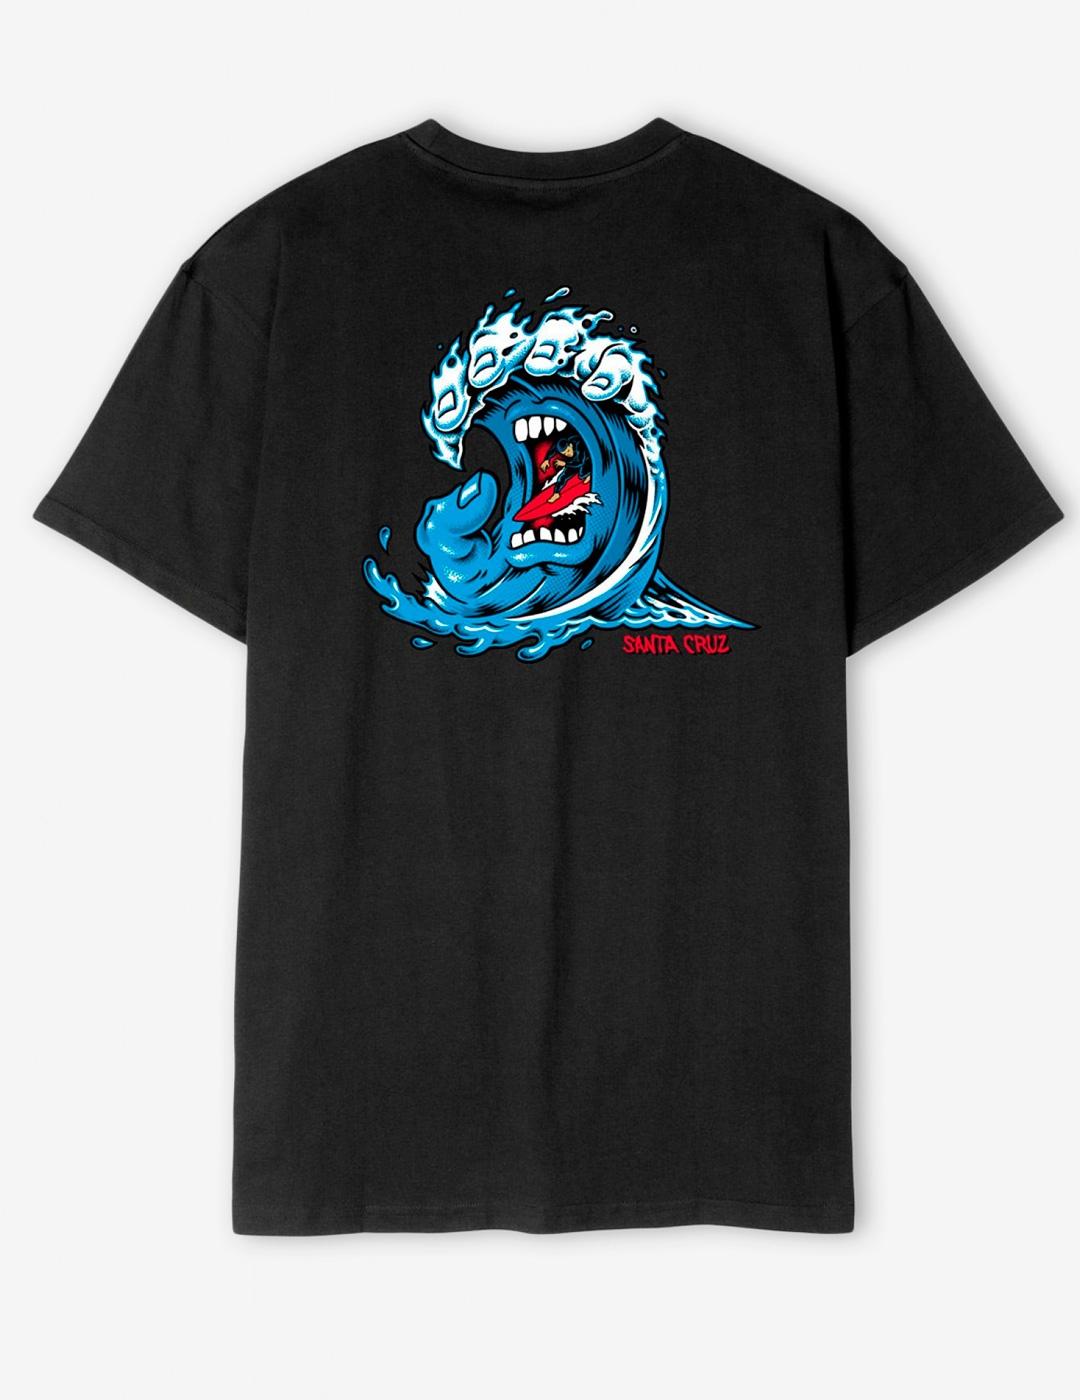 Camiseta Santa Cruz 'Screaming Wave' Negro